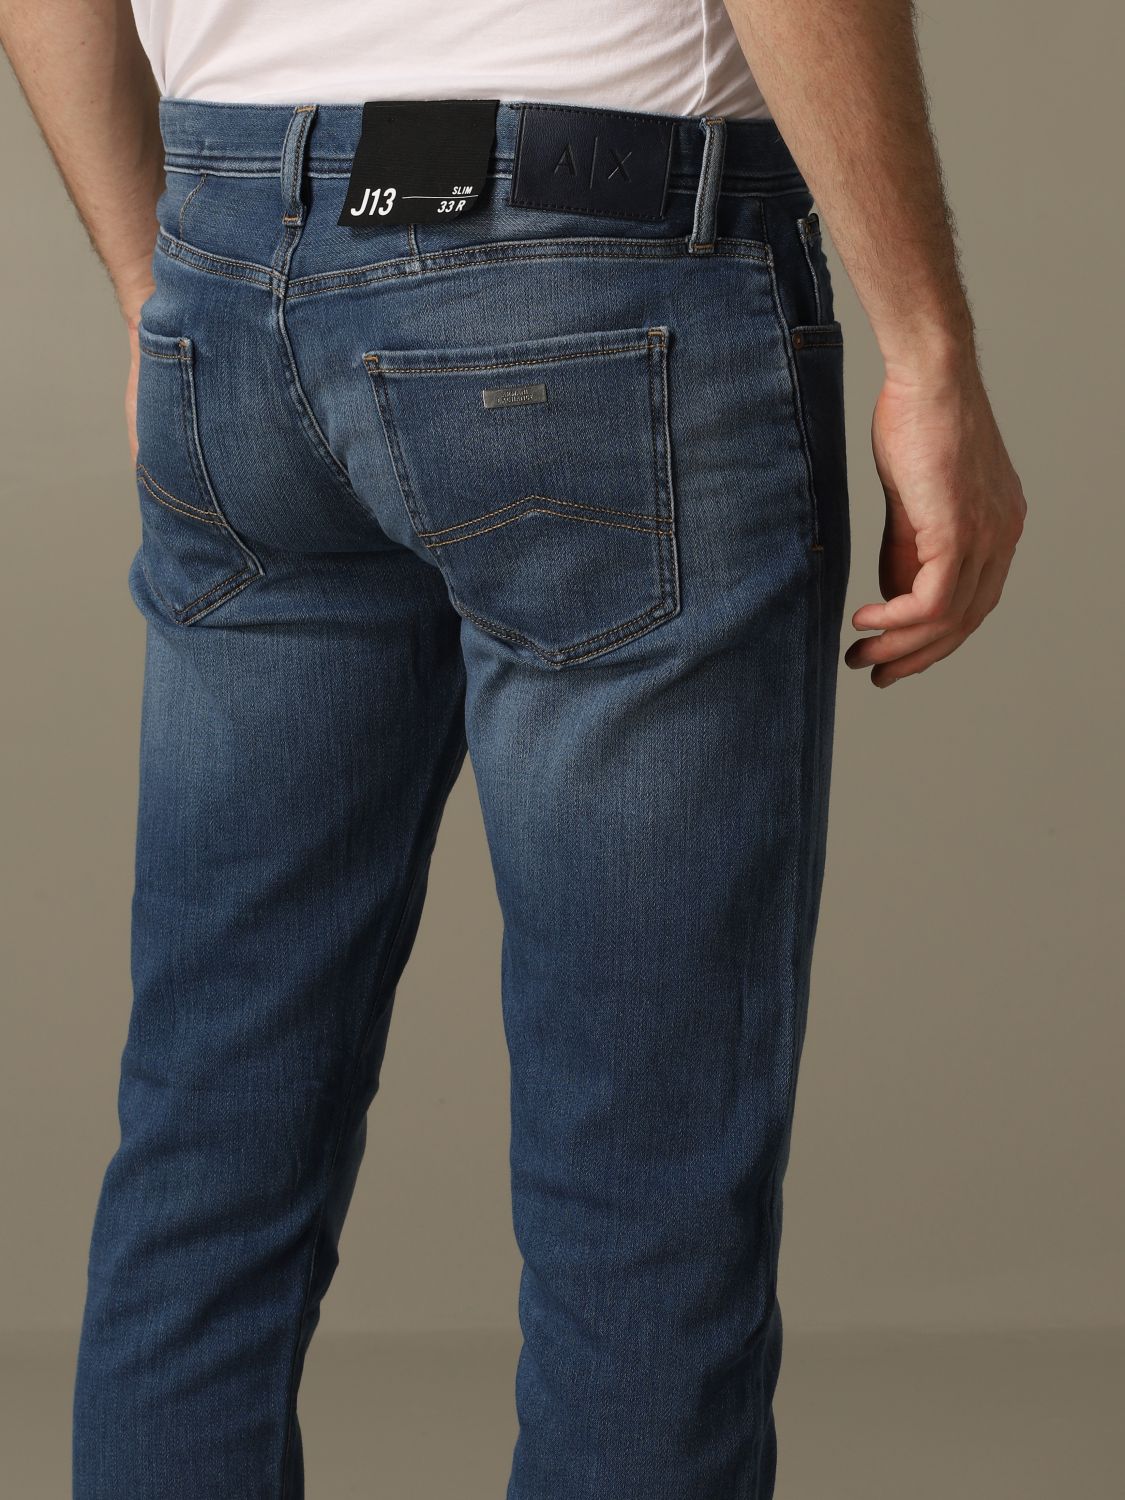 armani stretch jeans